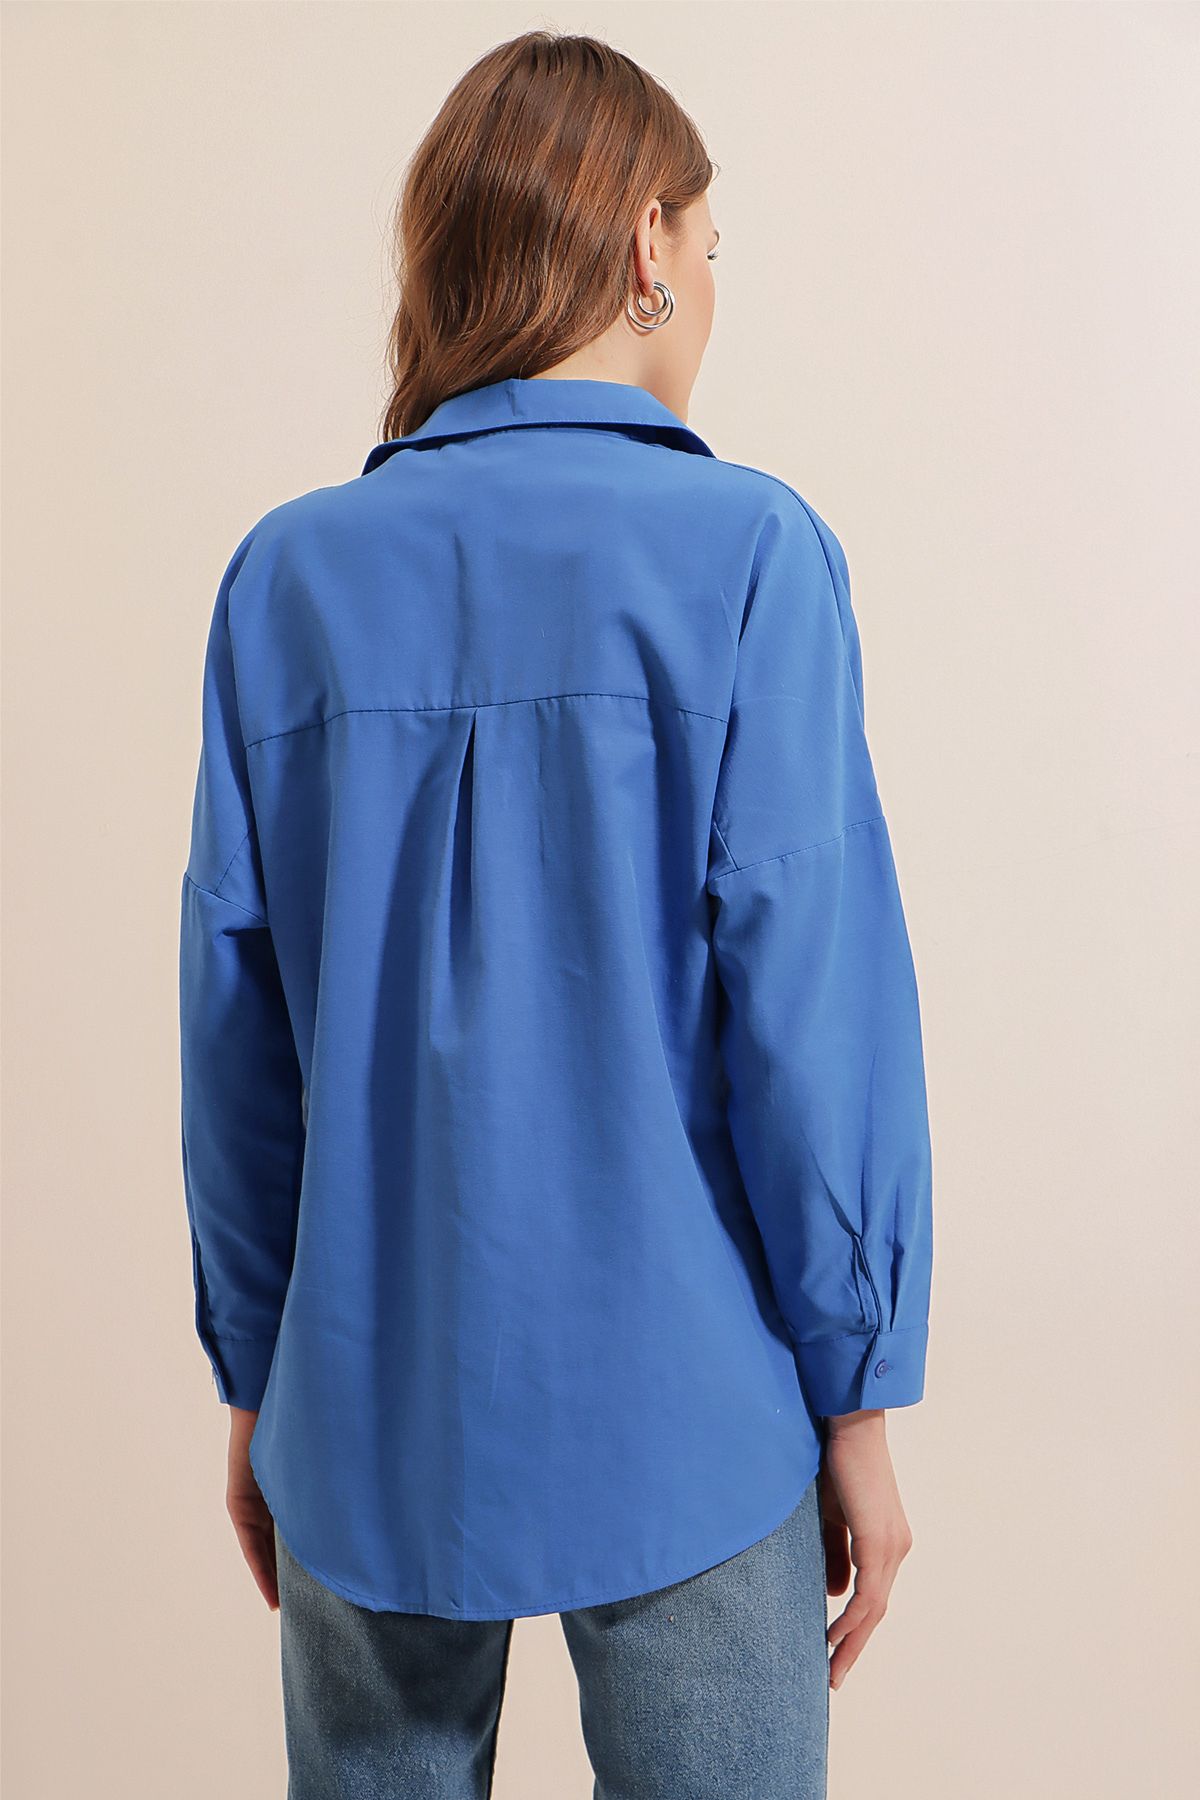 Bigdart پیراهن پایه بلند سایز 3900 - B.blue